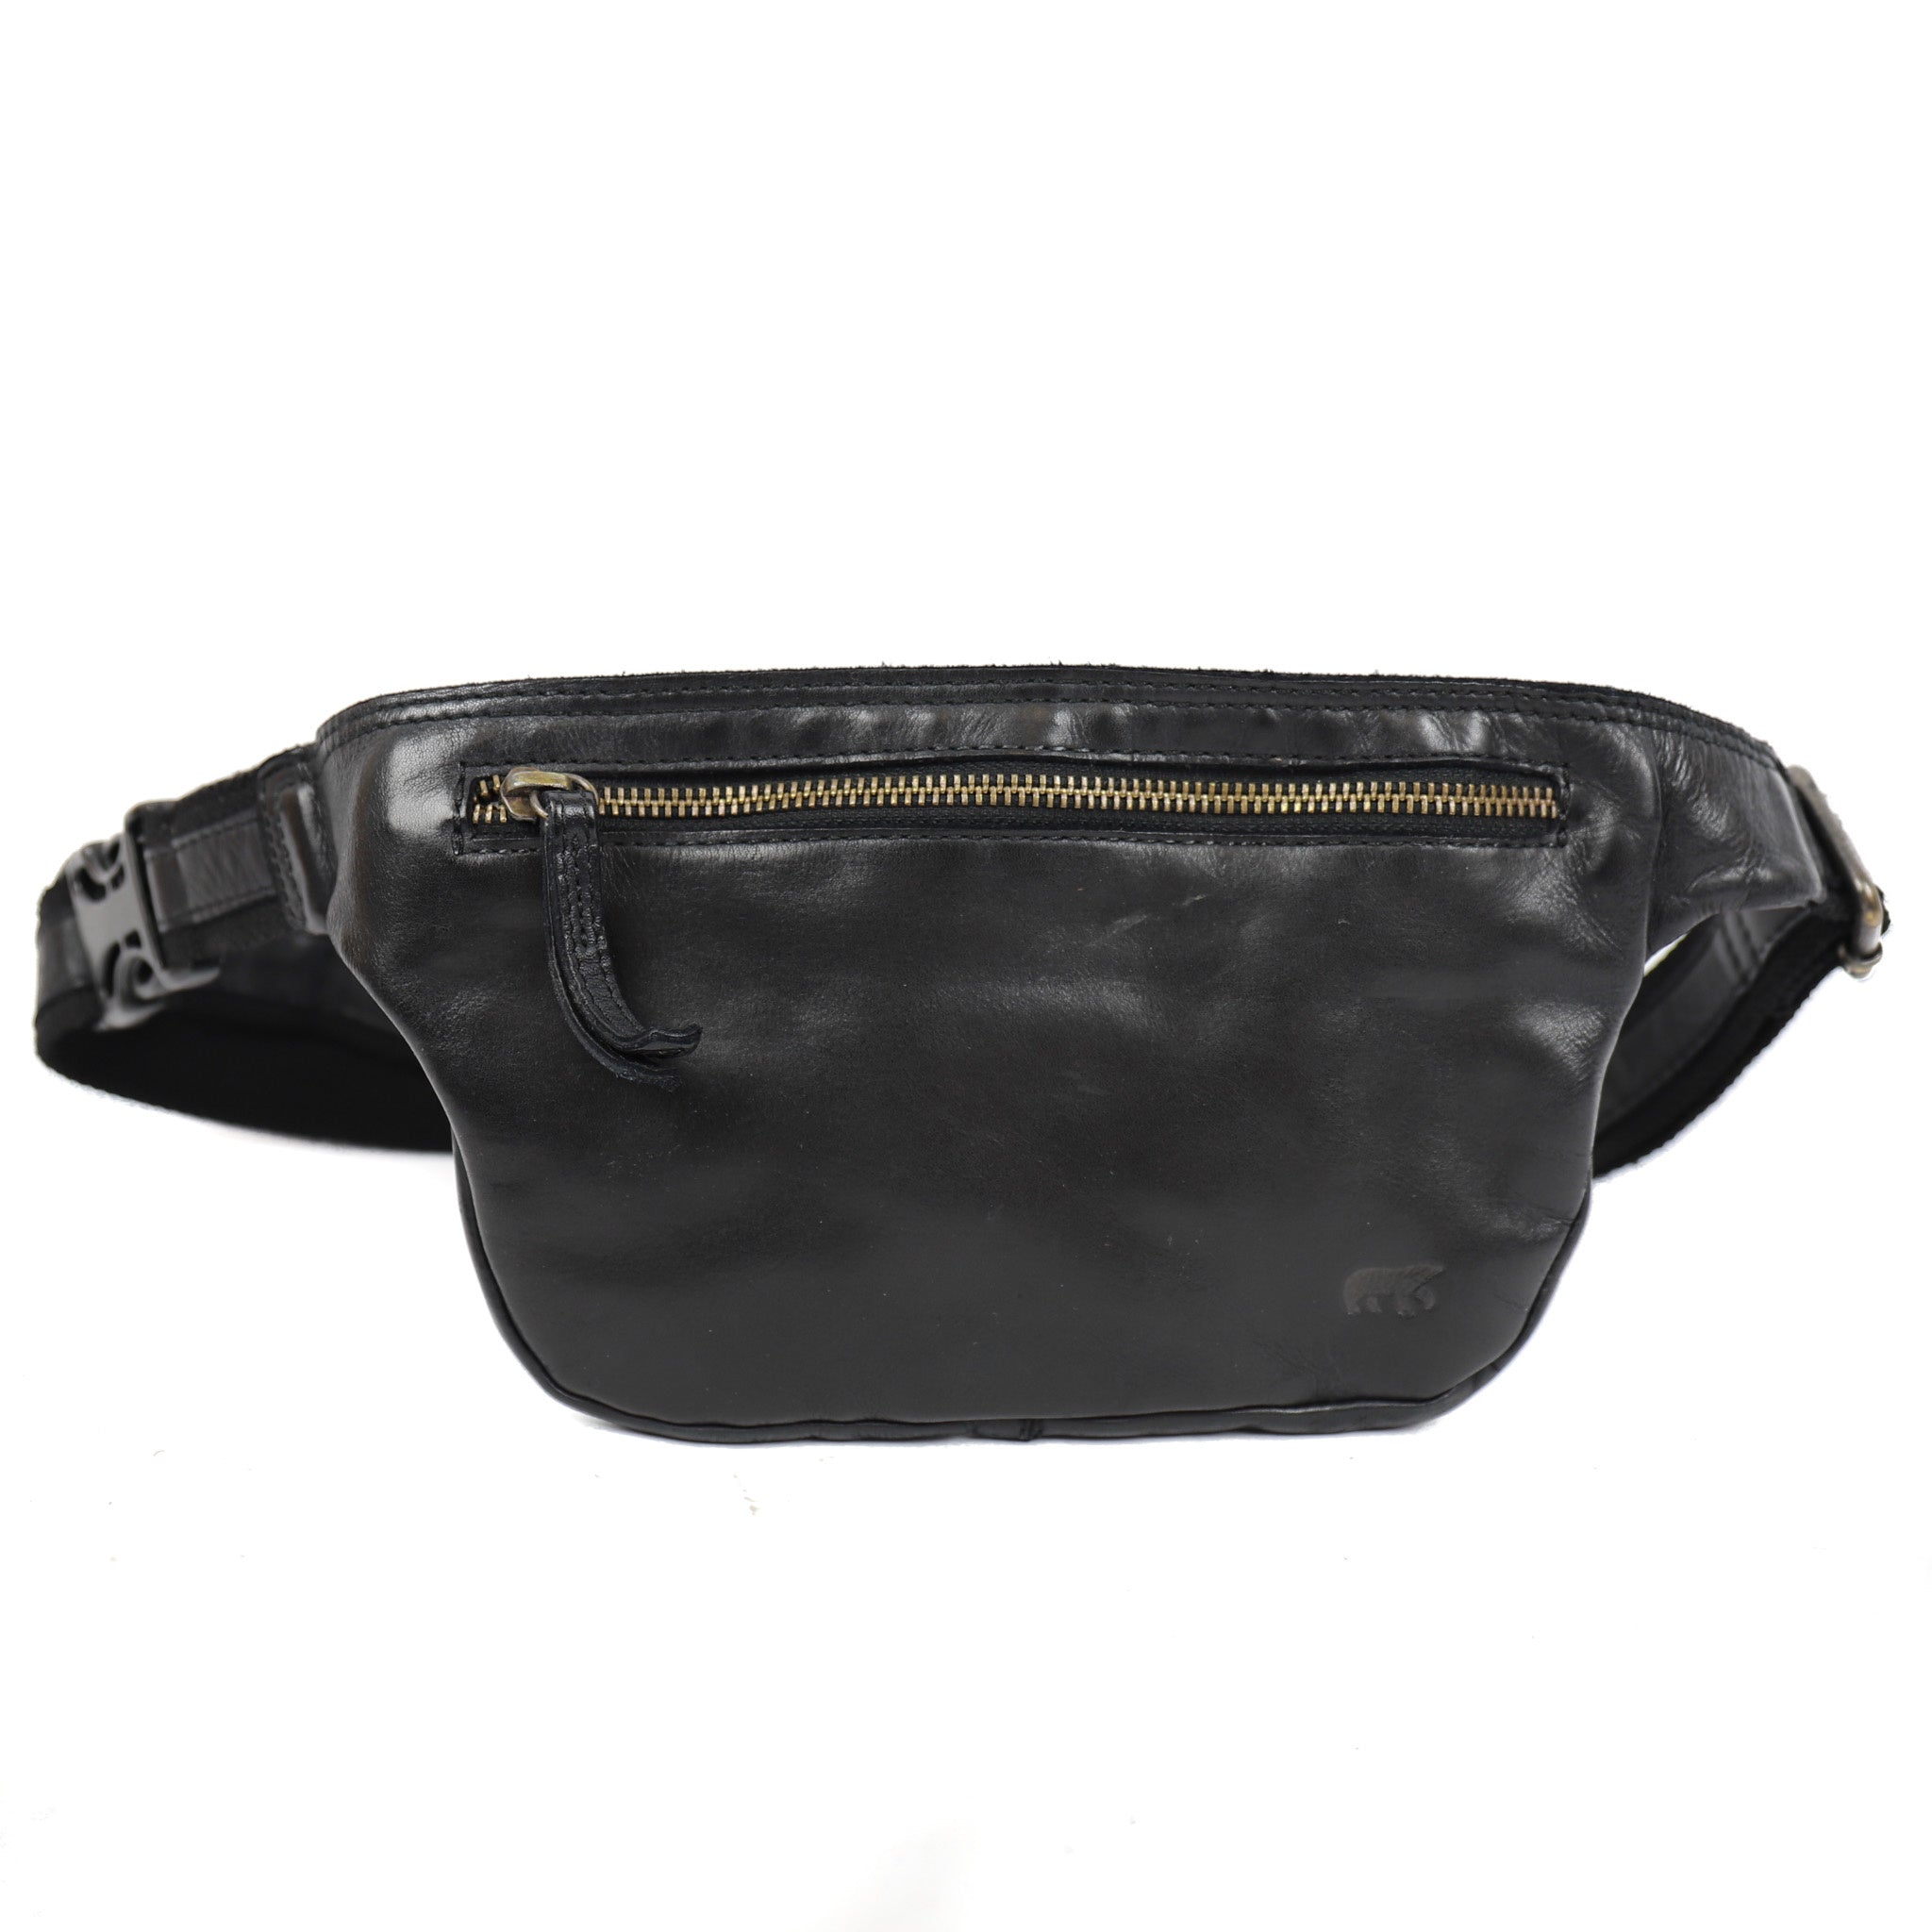 Bum bag 'Emmi' black - CL 36063